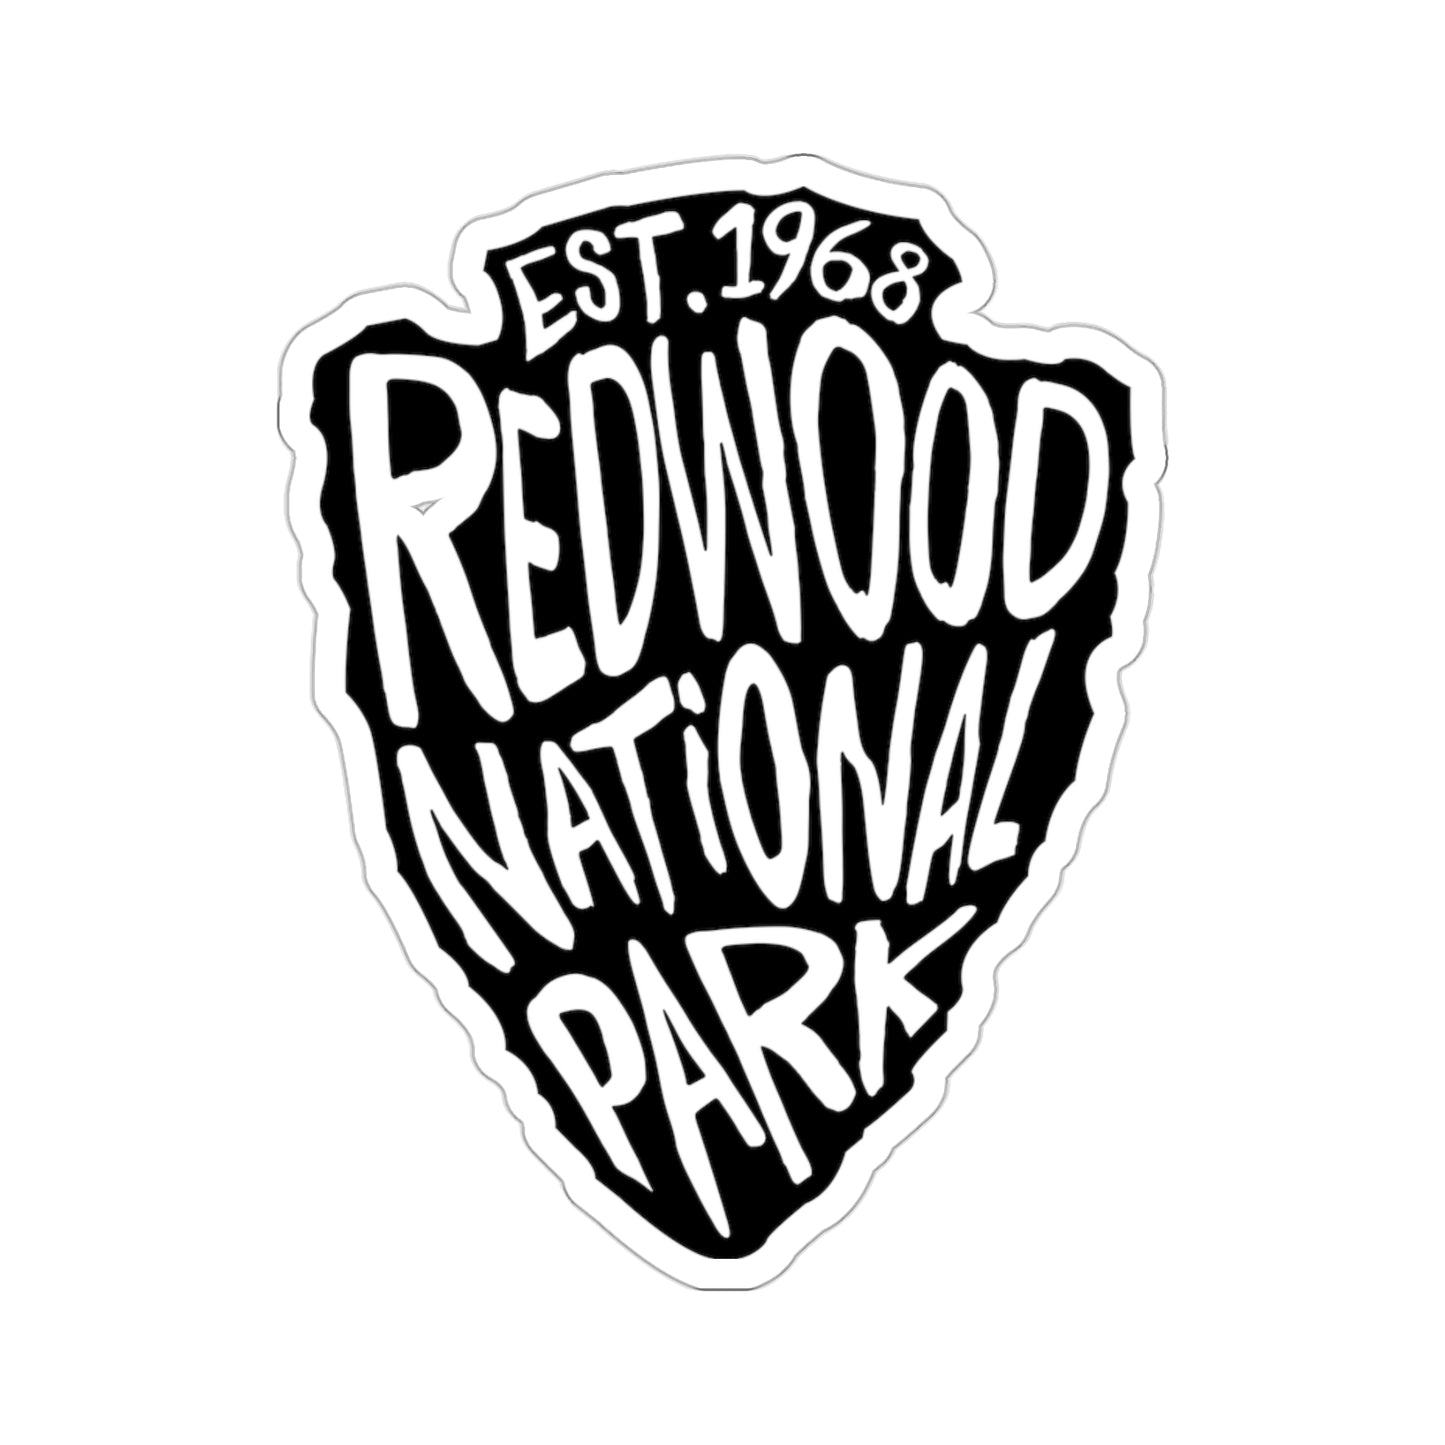 Redwood National Park Sticker - Arrow Head Design